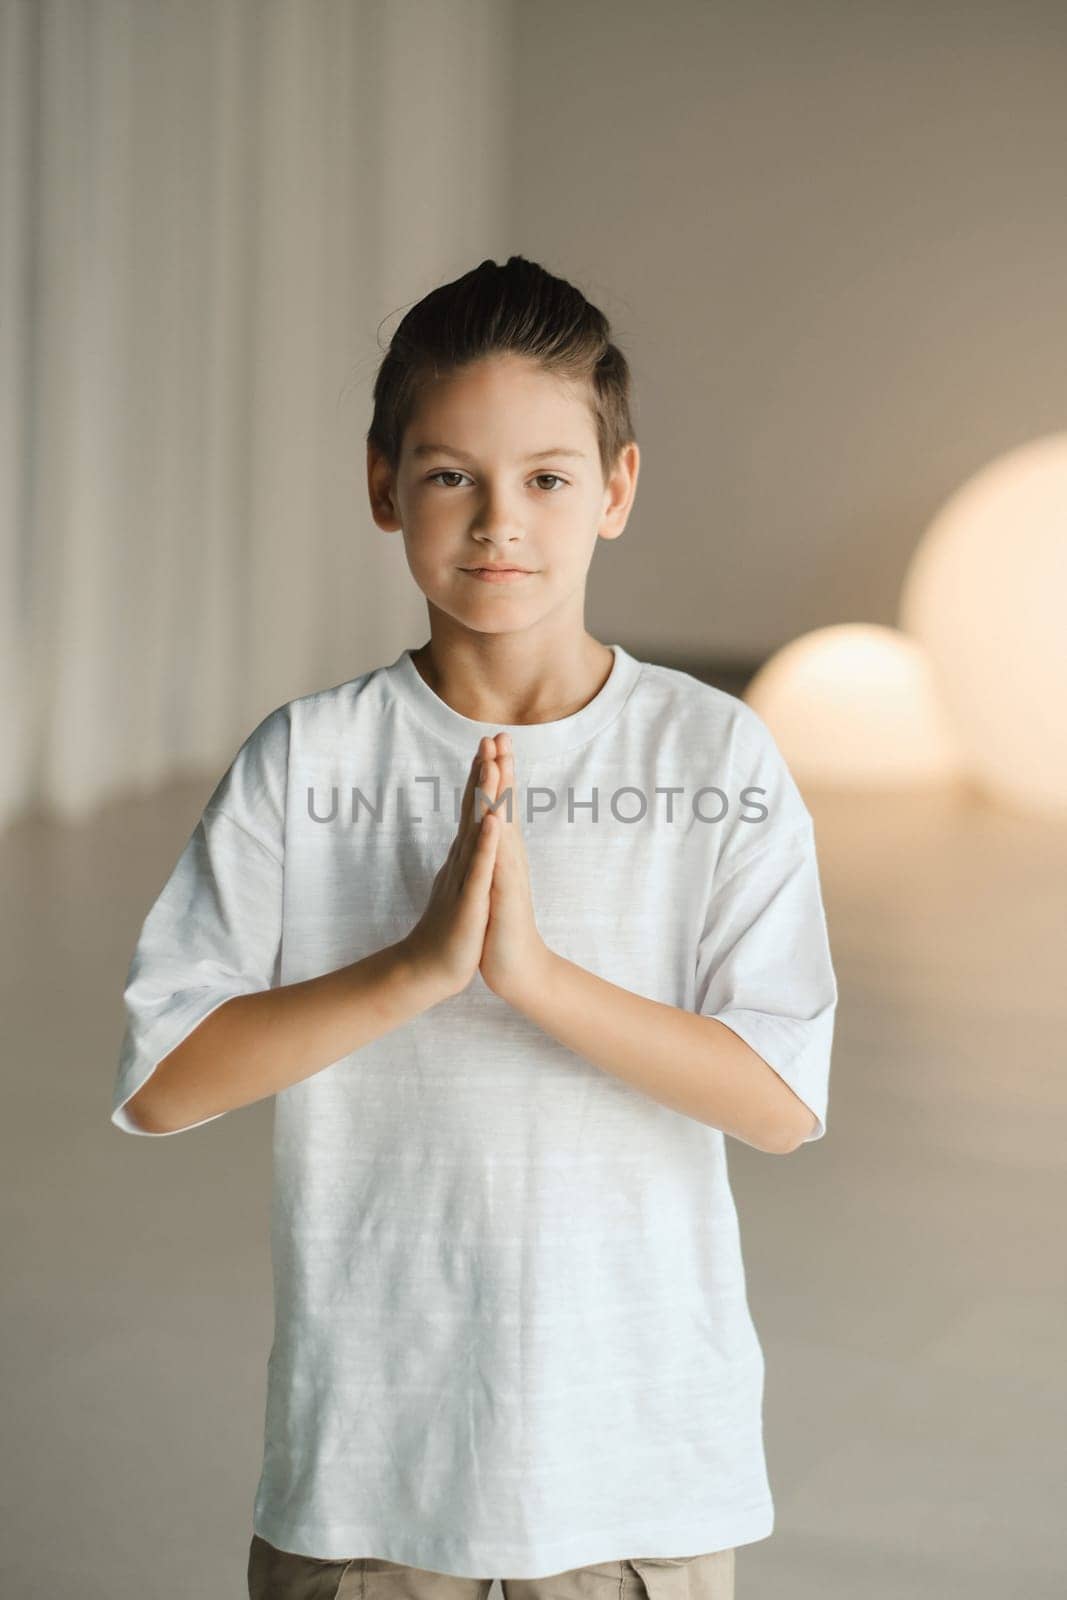 A child practices yoga poses indoors. Children's yoga.